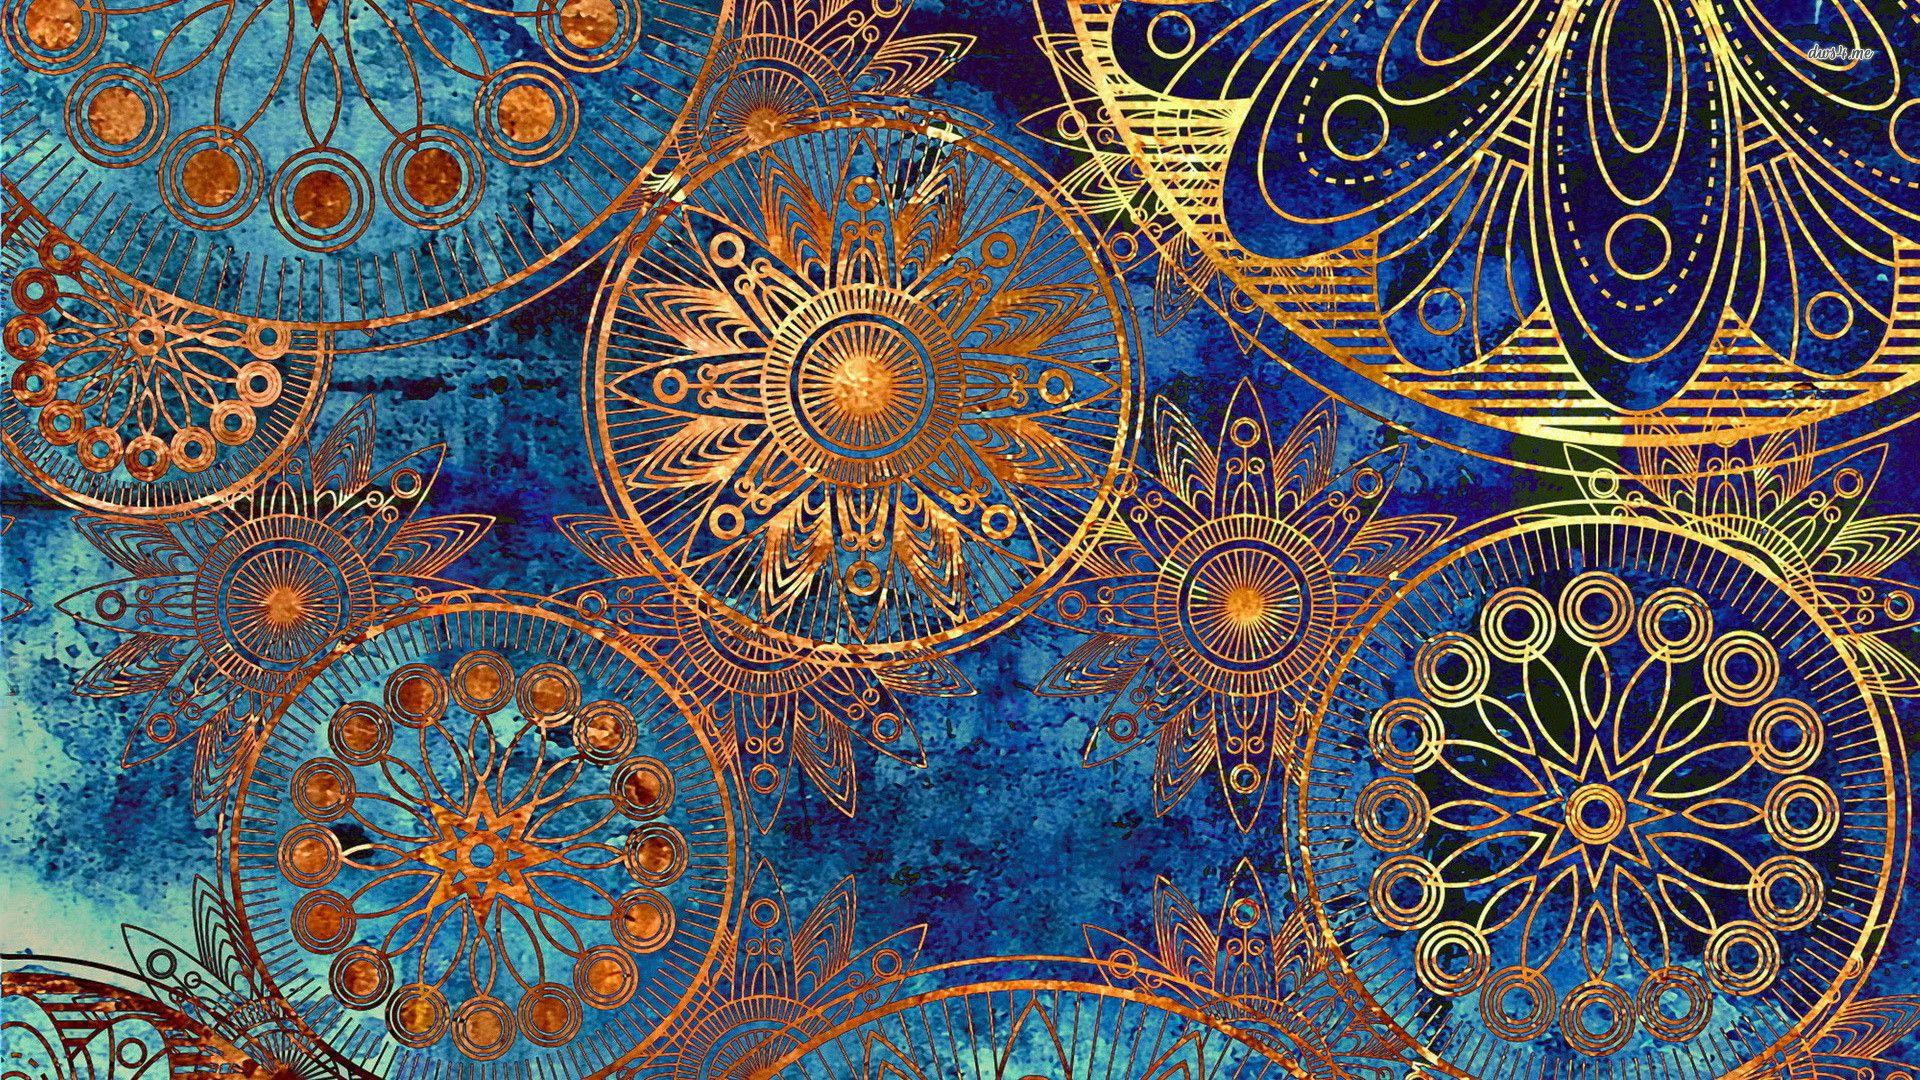 Tapestry Wallpaper Desktop background picture